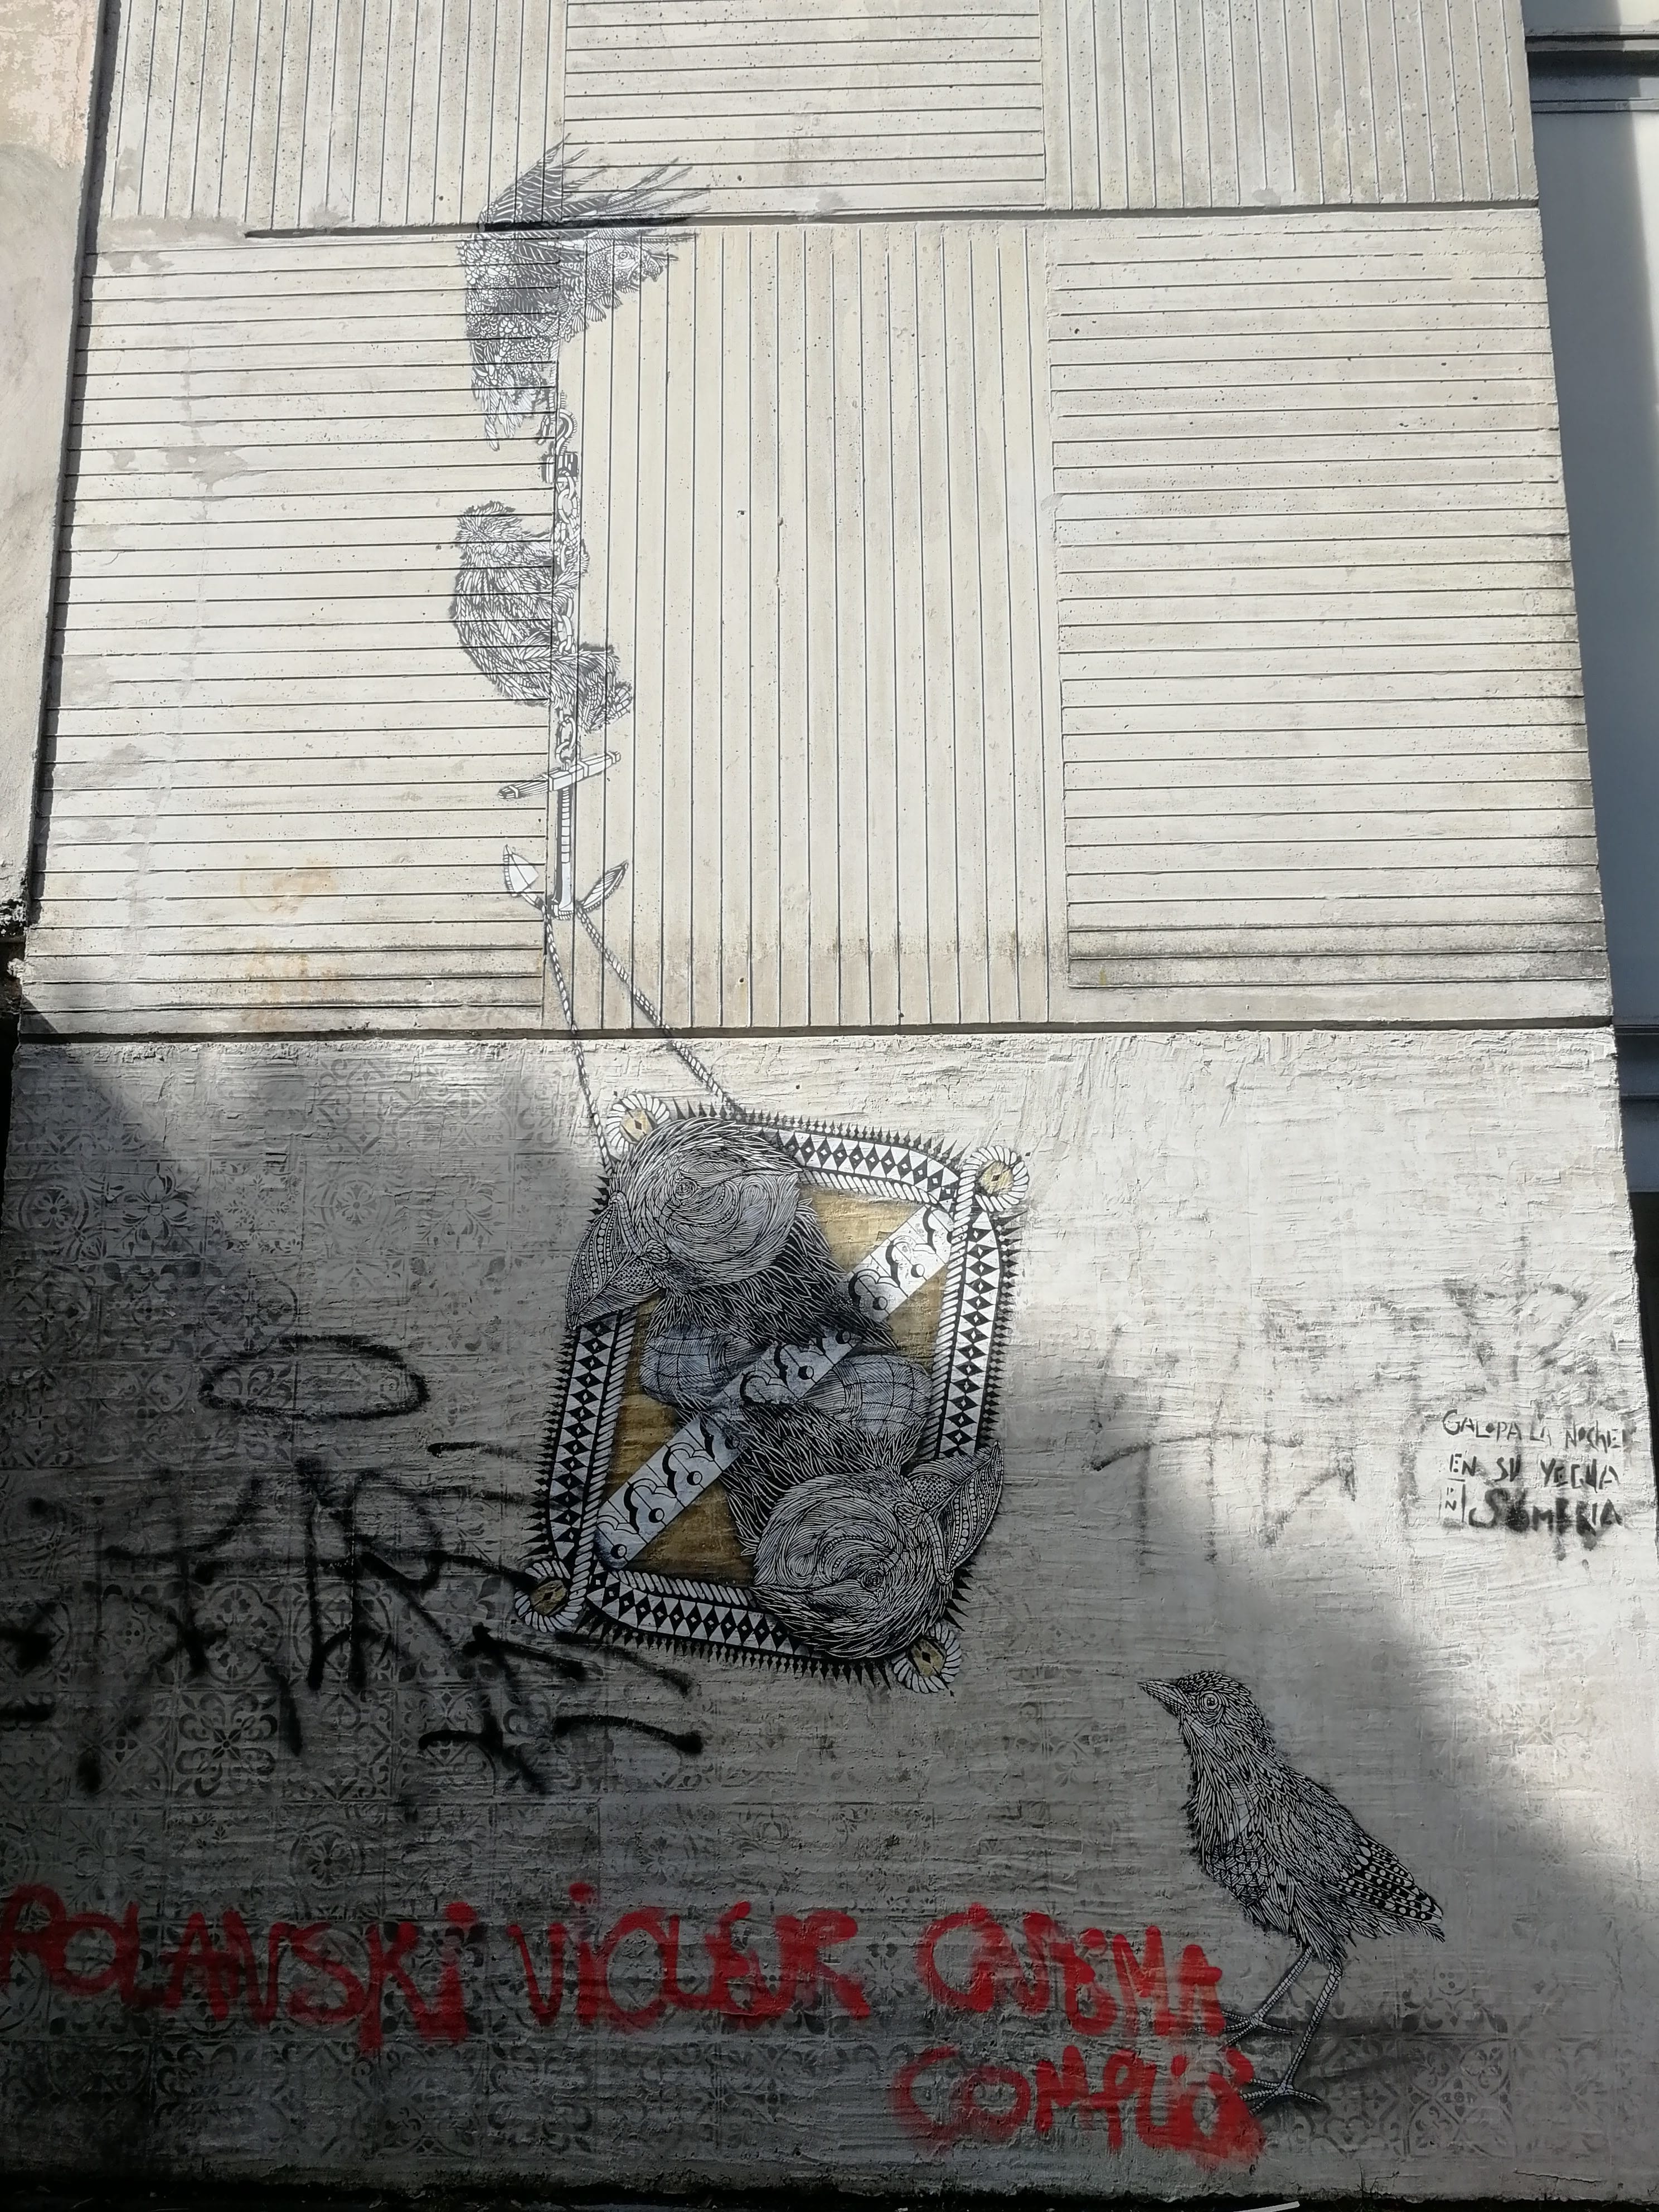 Graffiti 5260  de Monkey Bird capturé par Rabot à Pessac France